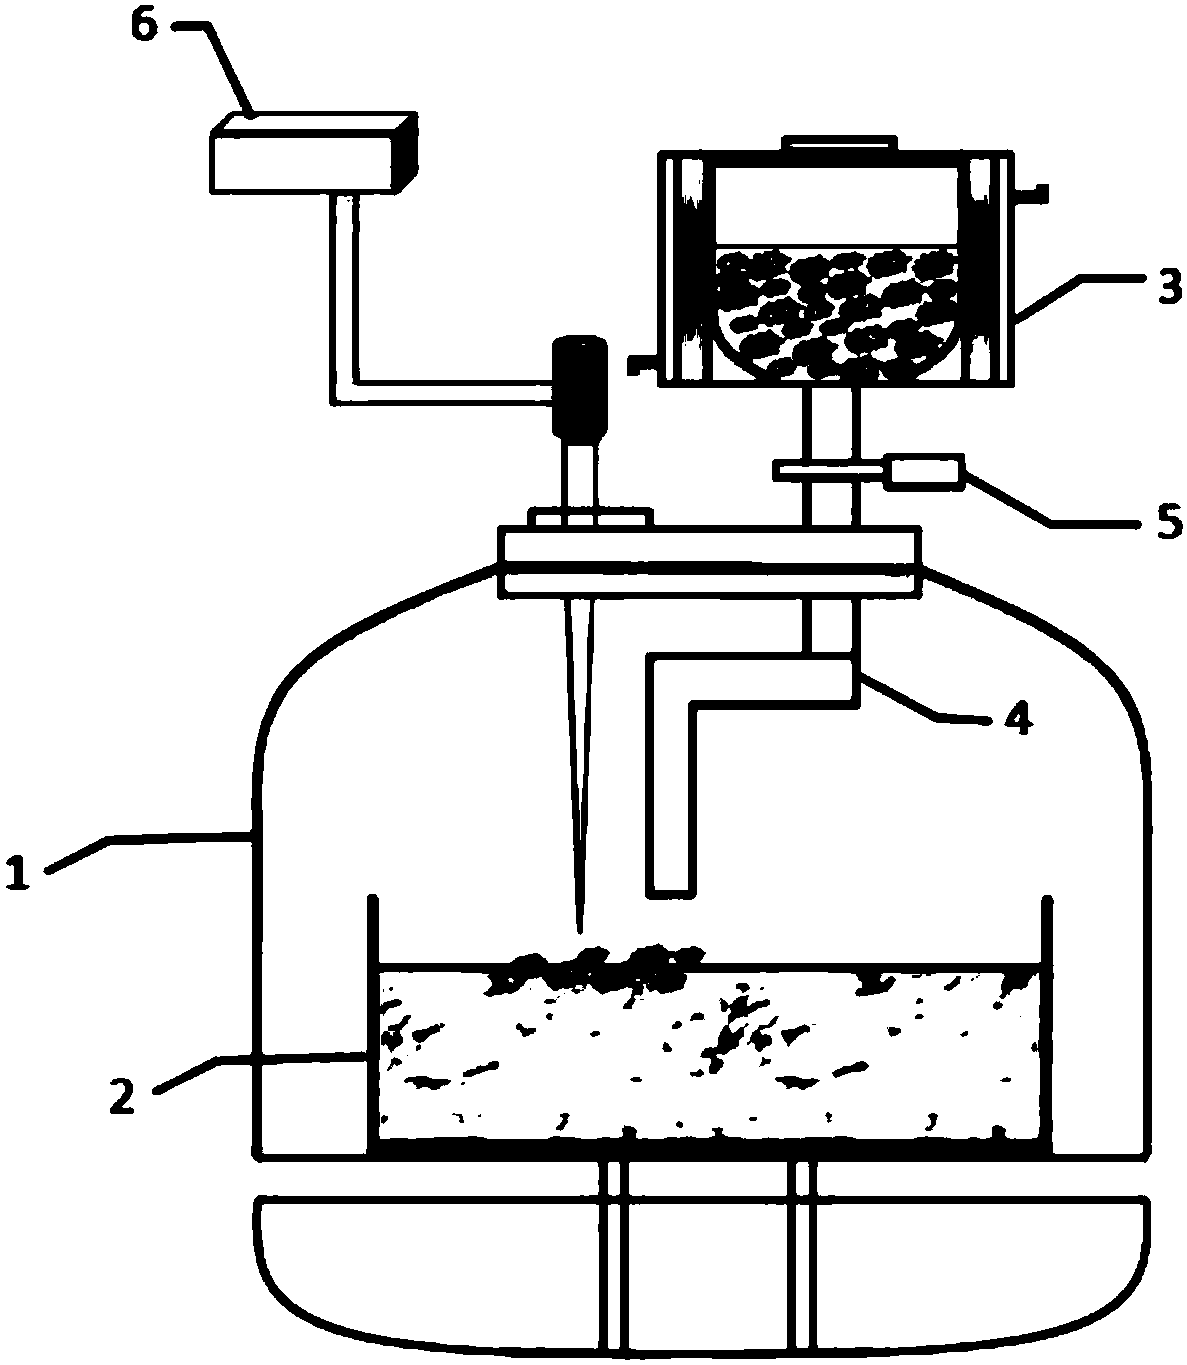 N-type polycrystalline silicon ingot casting device and ingot casting method